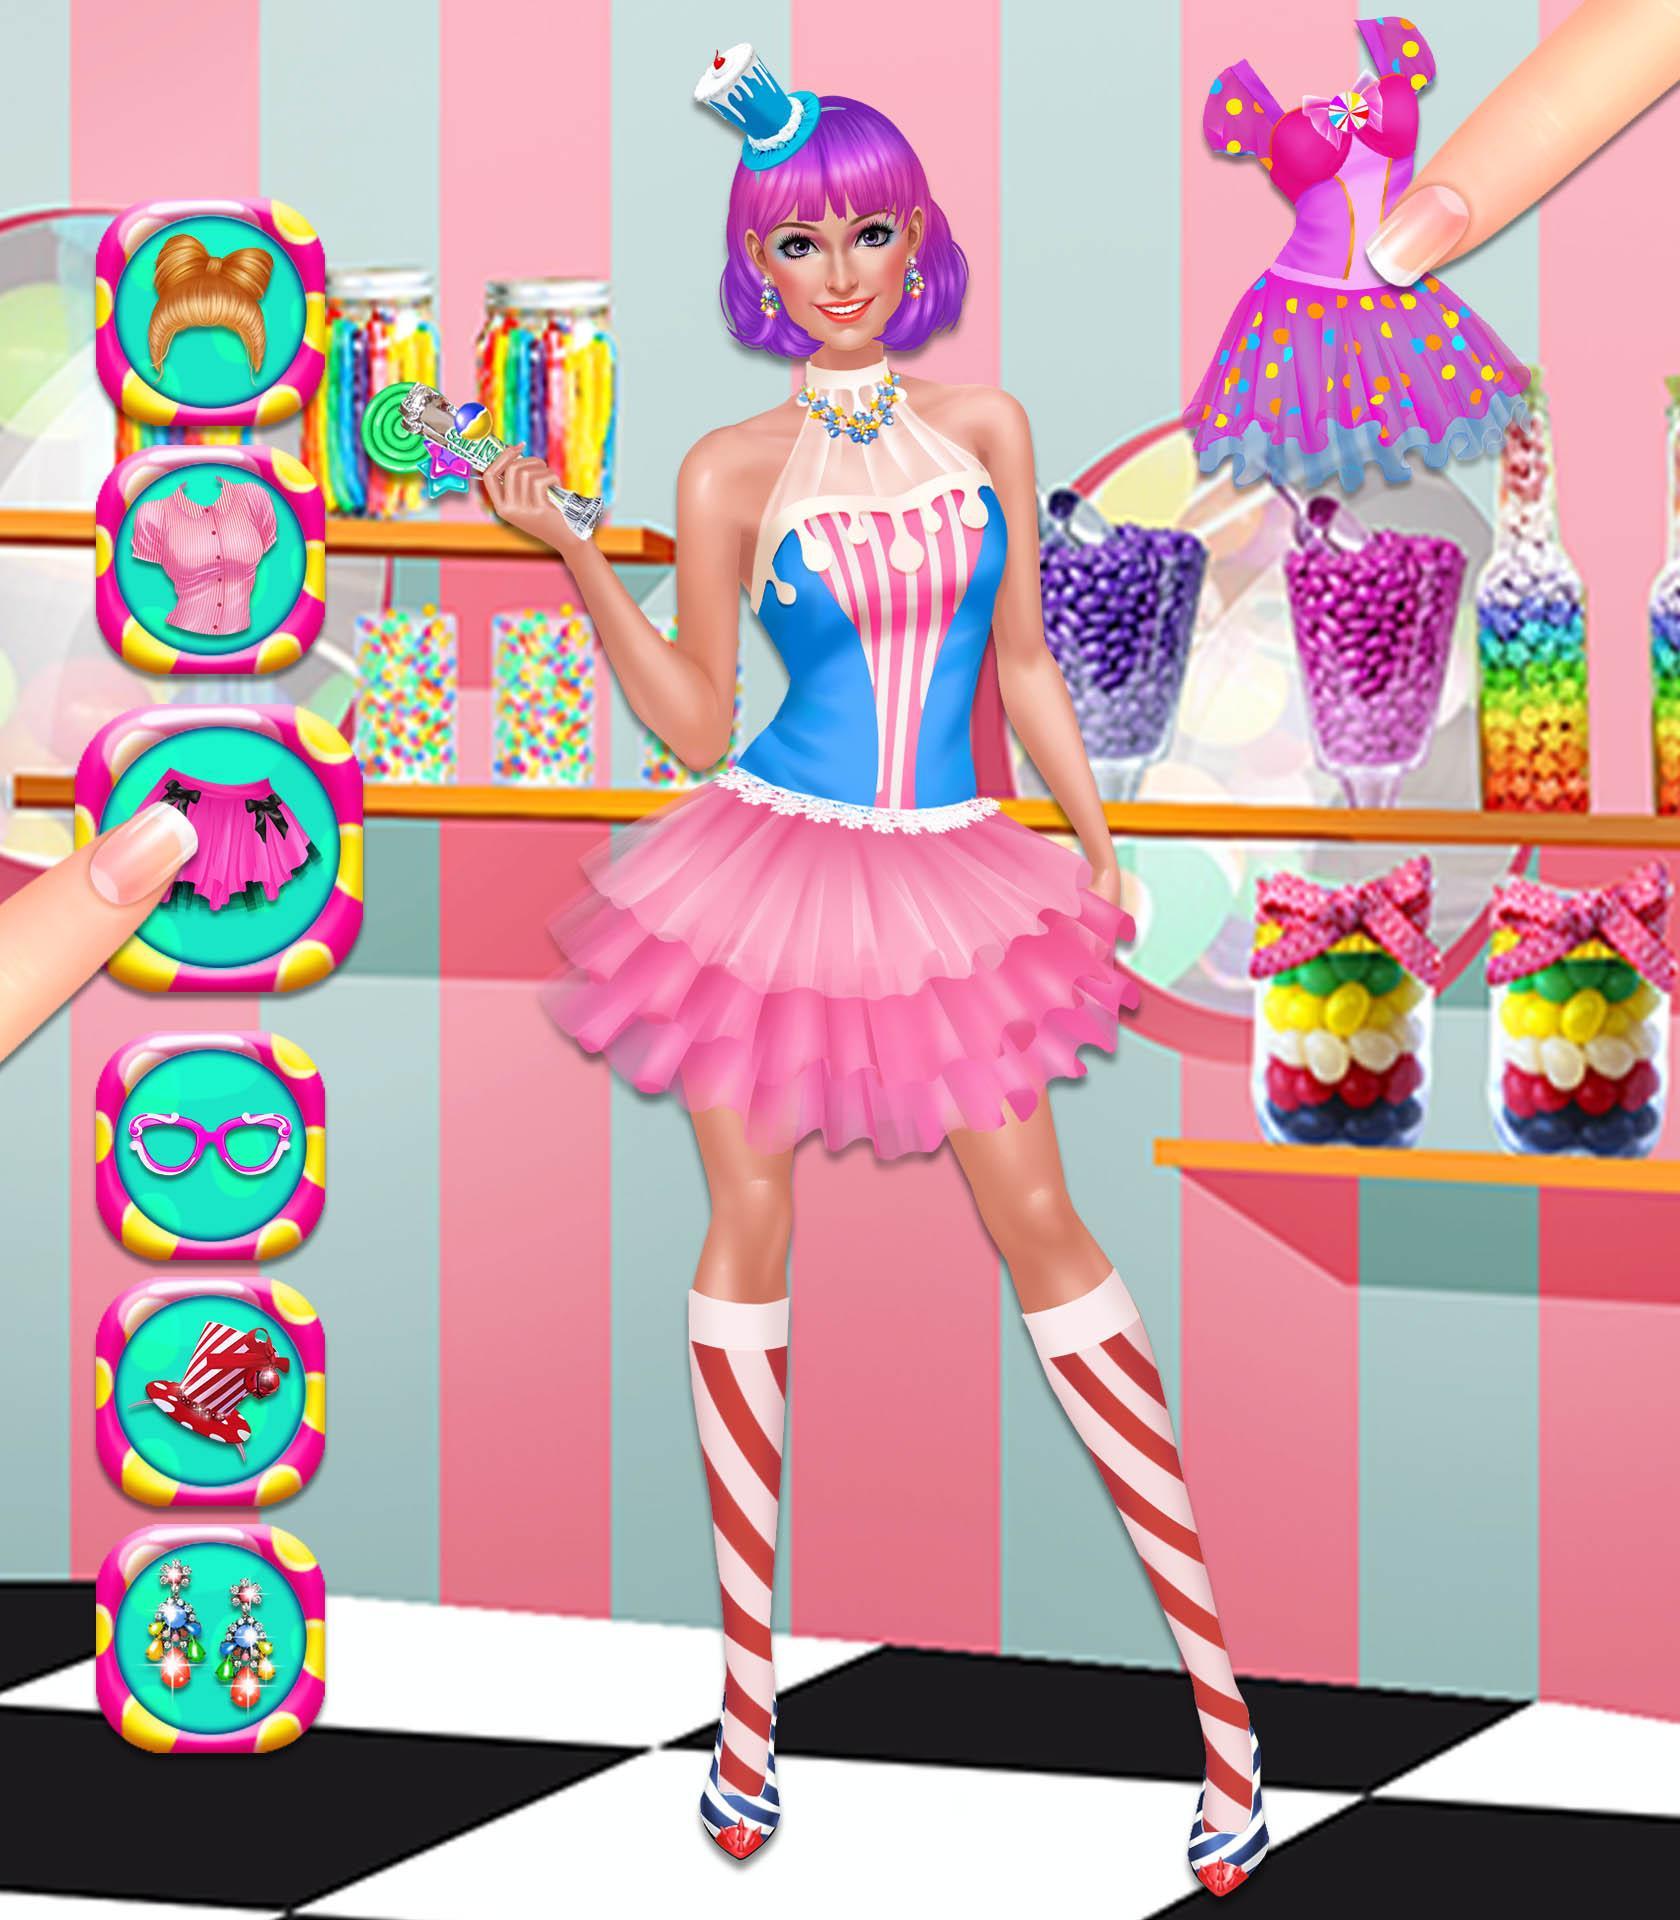 Candy candy shop 1. Кэнди Бьюти салон. Хед Канди вечеринка костюм. Вечеринка Candy shop одежда. Вечеринка Кэнди шоп образ.